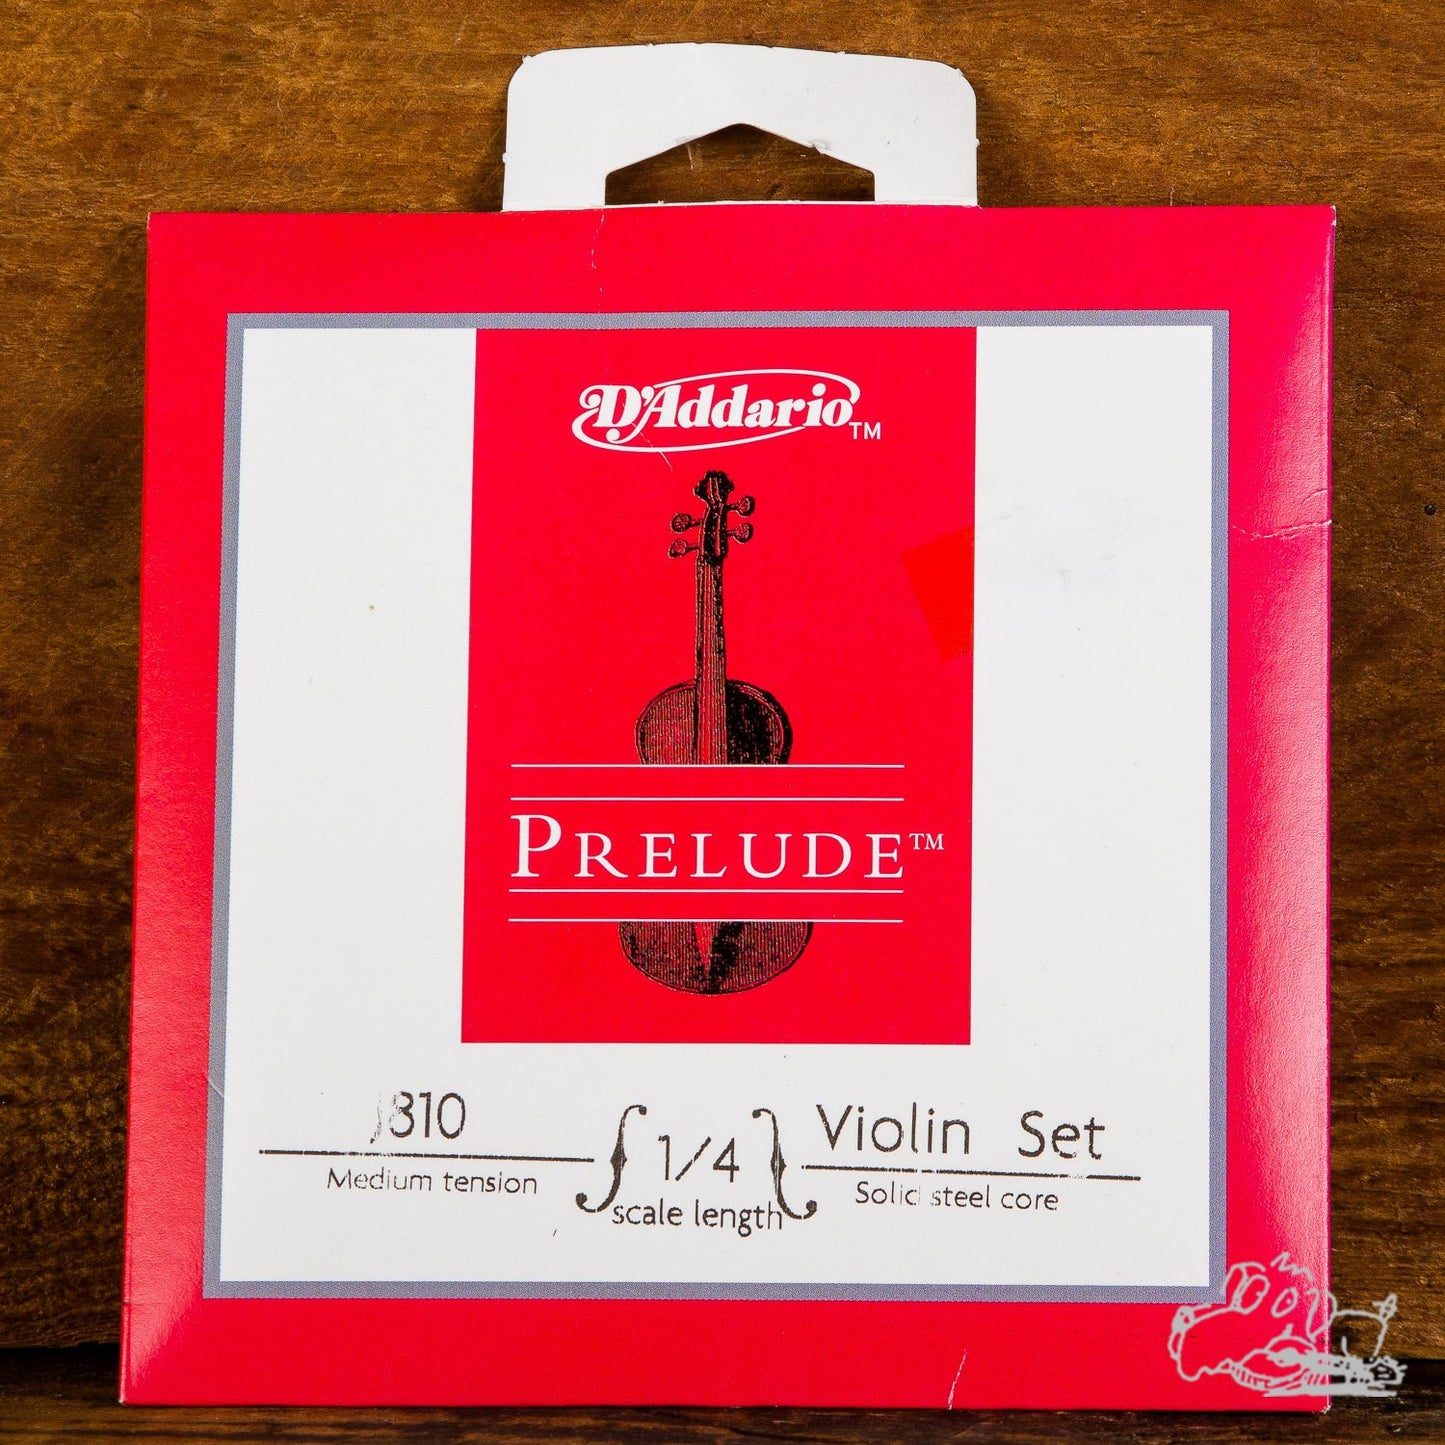 D'Addario Prelude Violin Strings 1/4 Scale Length Solid Steel Core